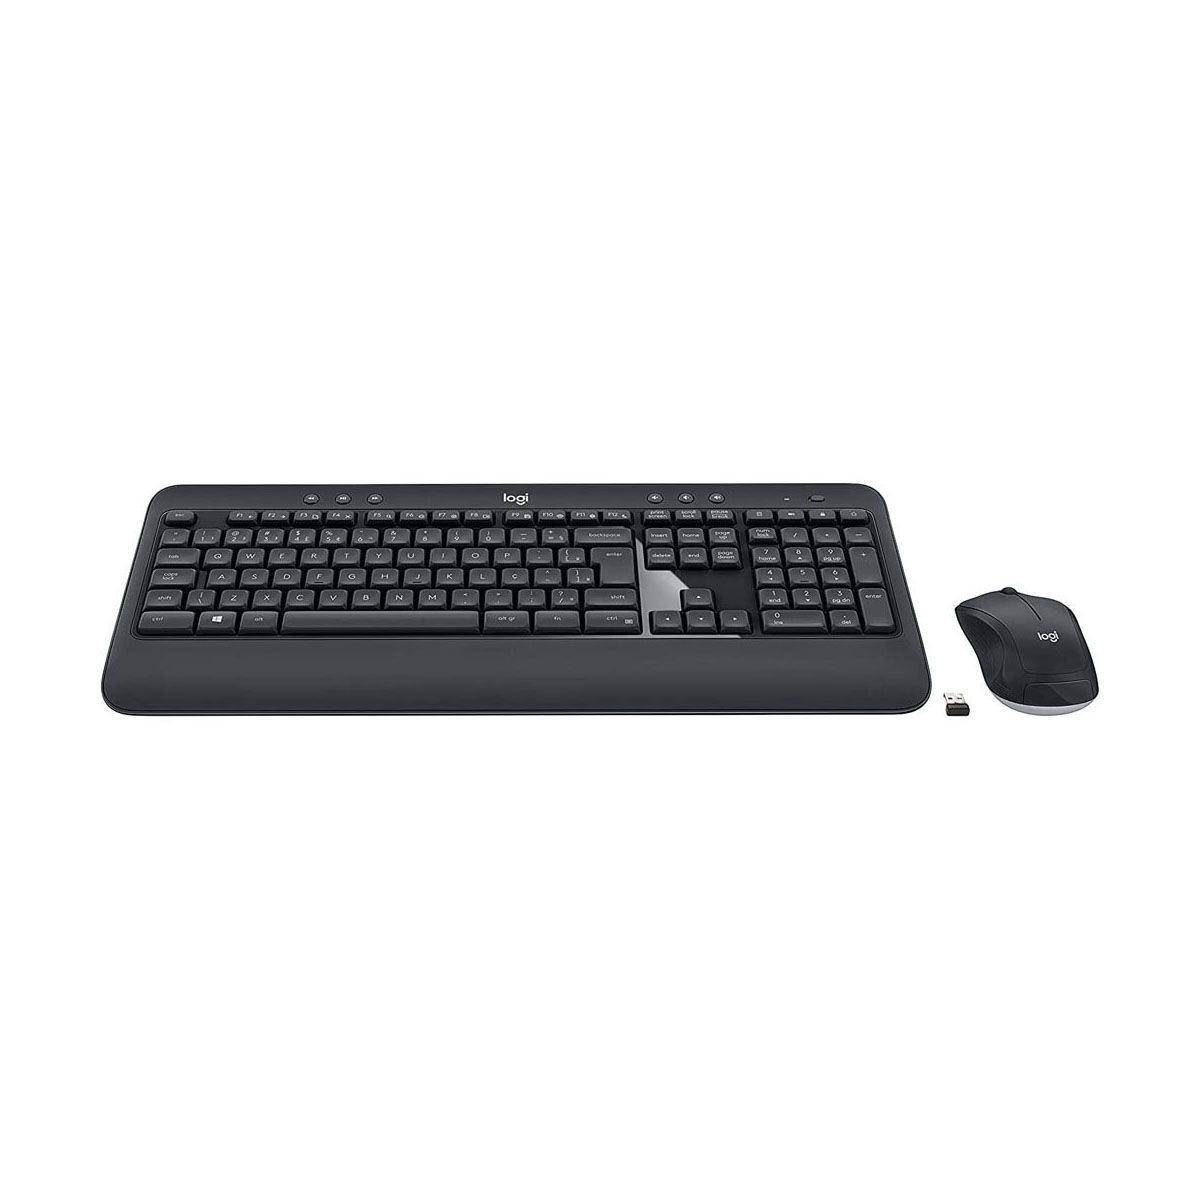 shop44-keyboard-mouse (2)